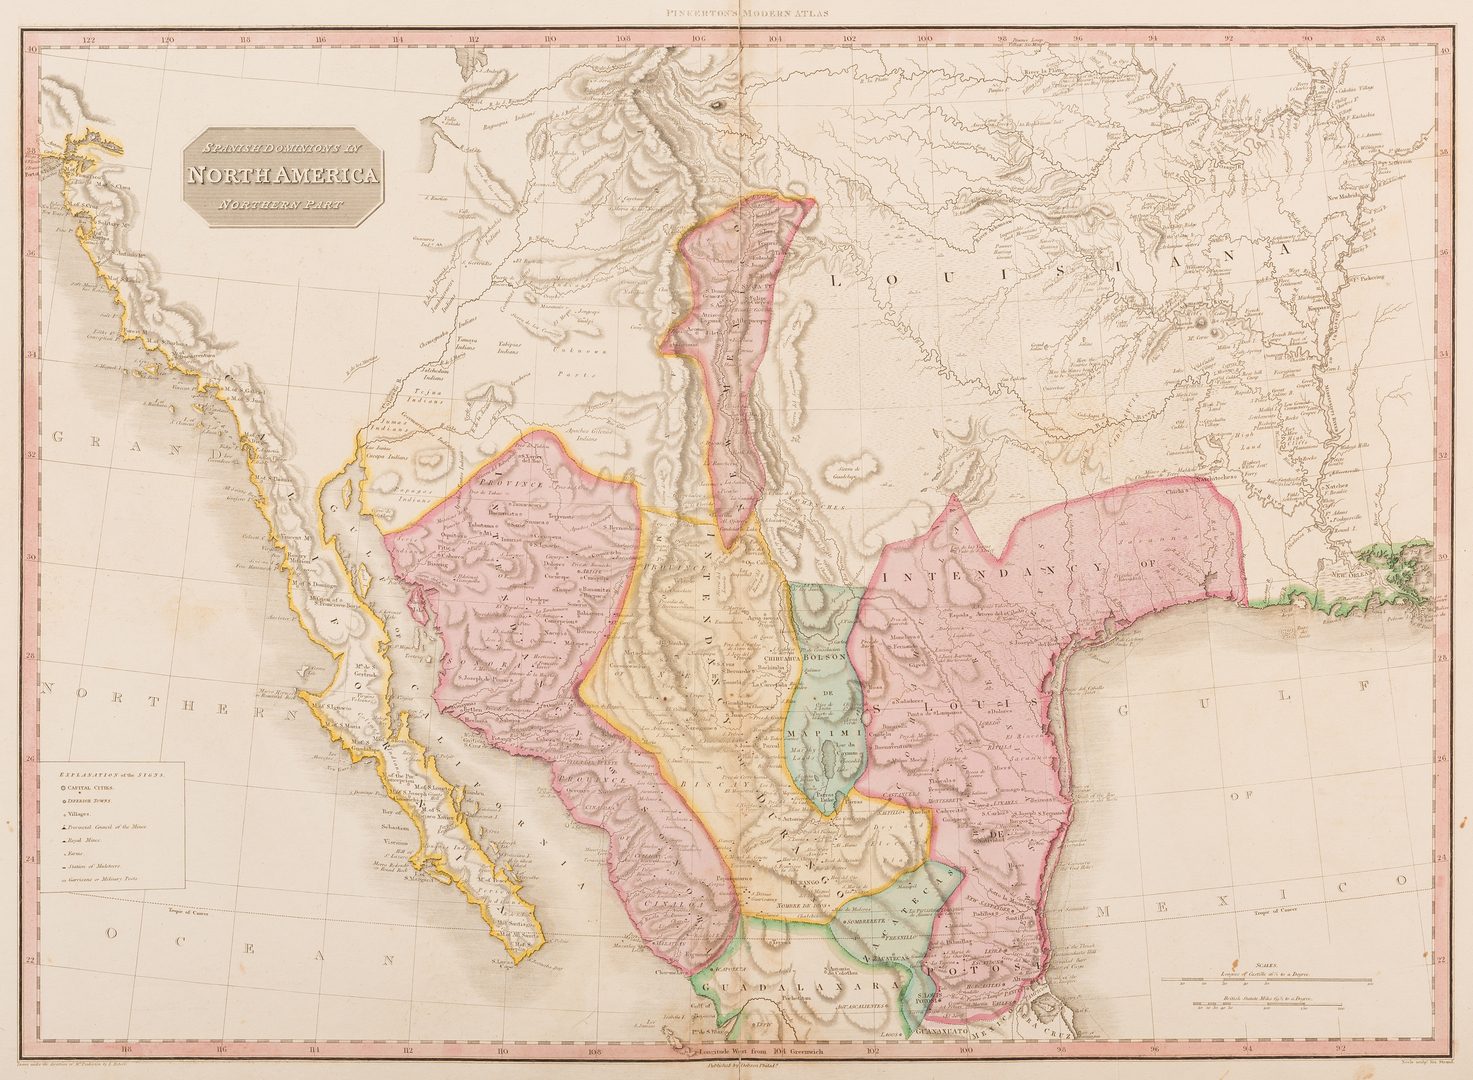 Lot 538: Spanish Dominions of N. Amer. Map, 1818 Pinkerton